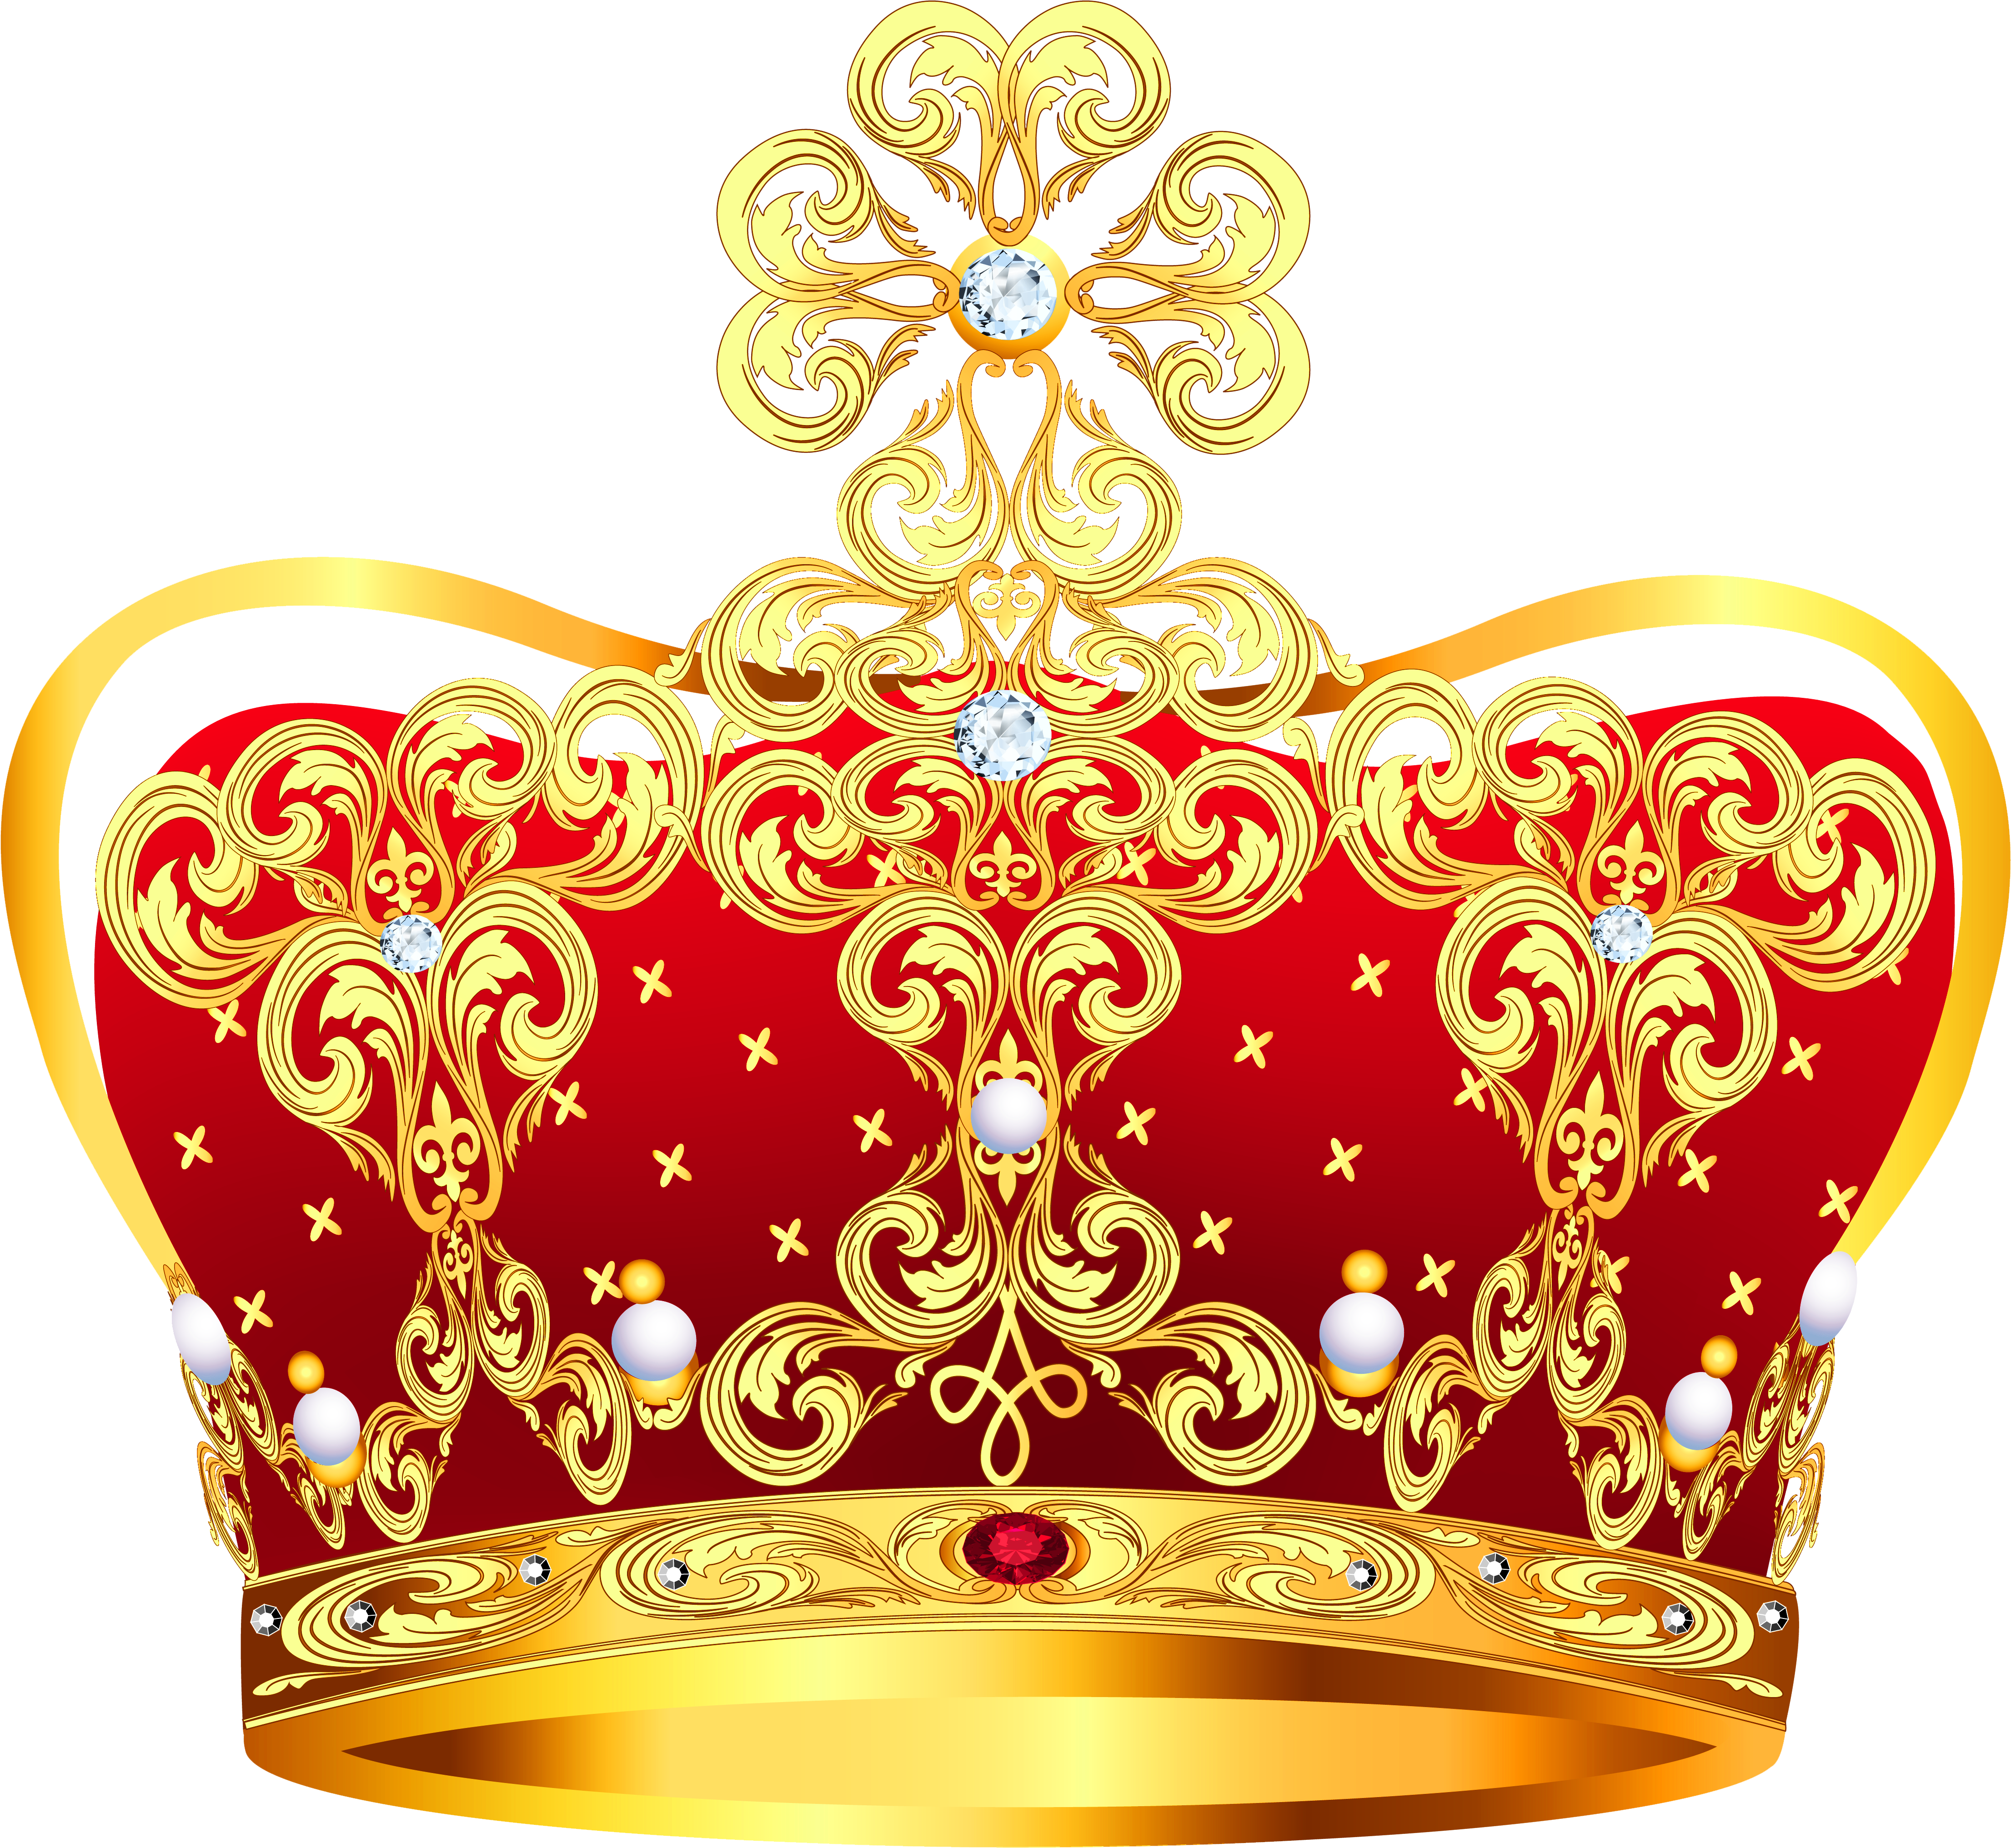 Imagem Golden PNG da rainha coroa